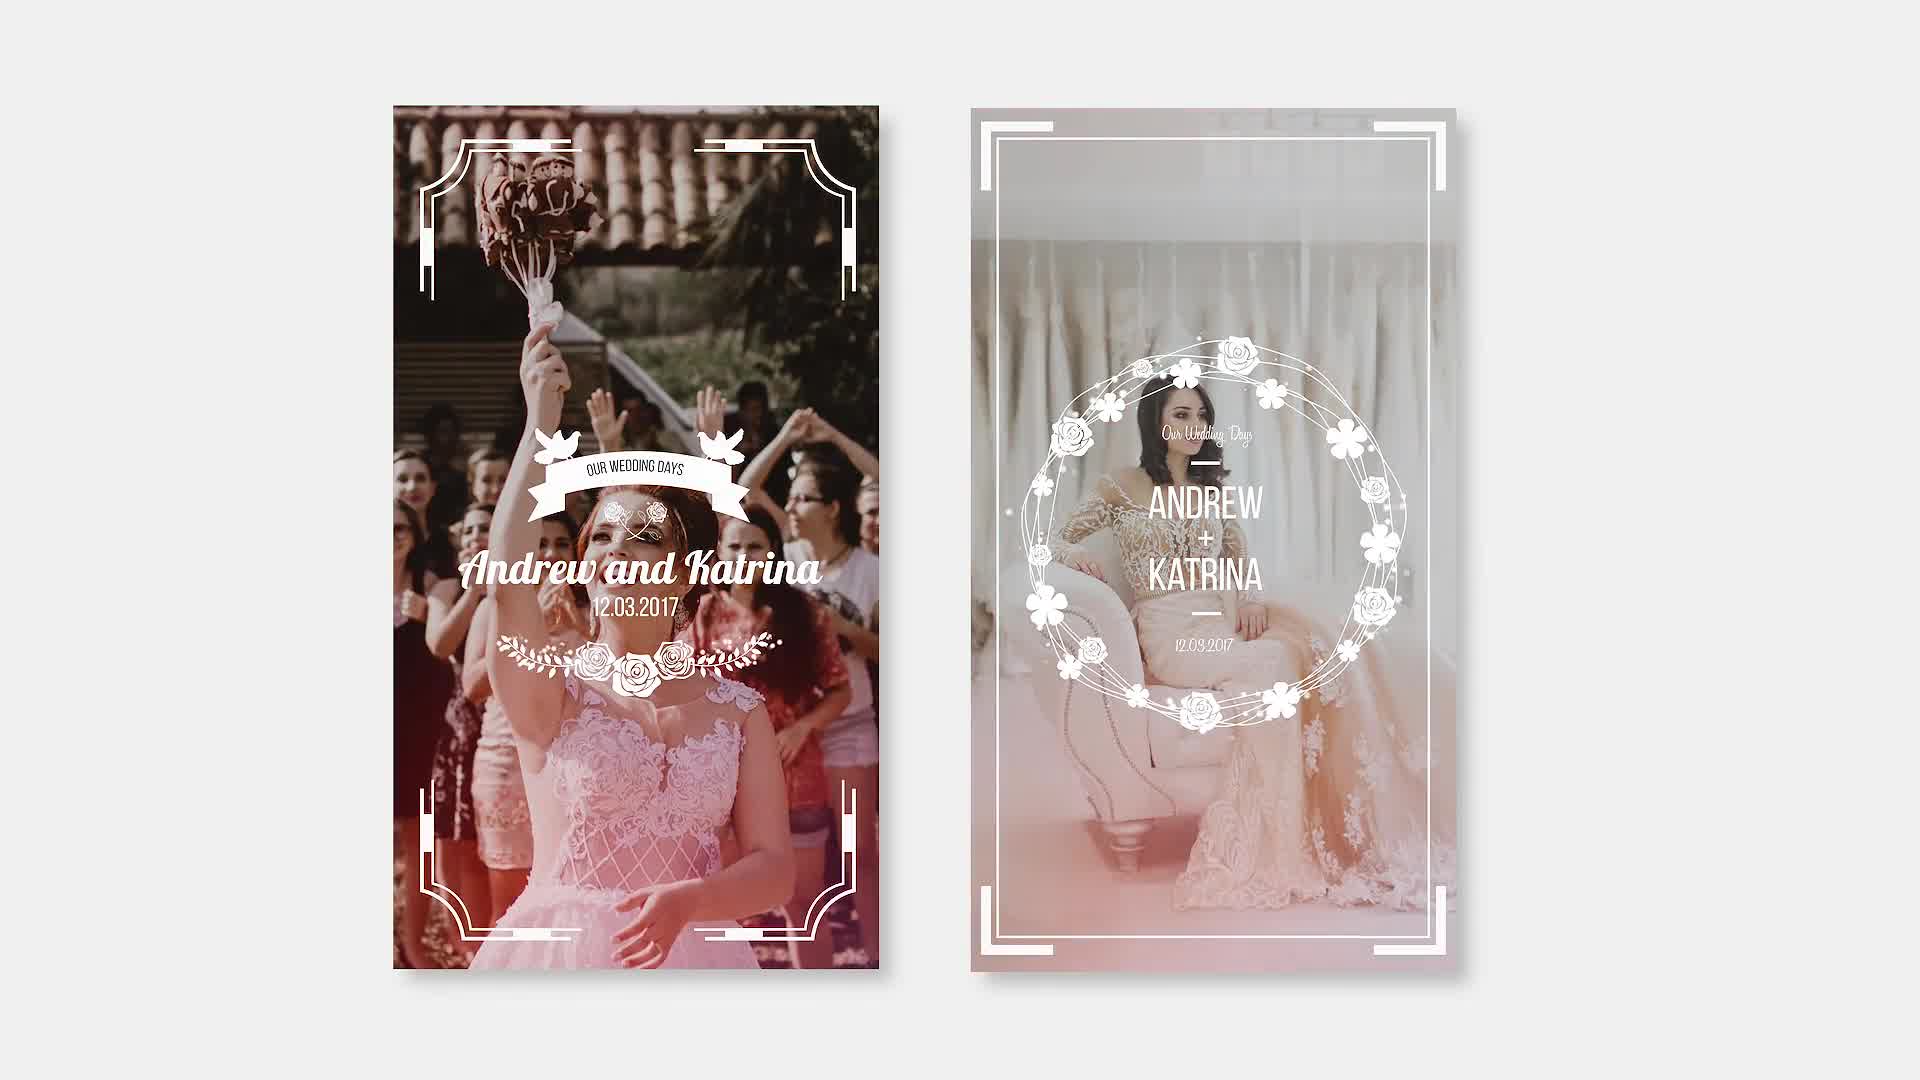 Wedding Instagram Stories - Download Videohive 22991559